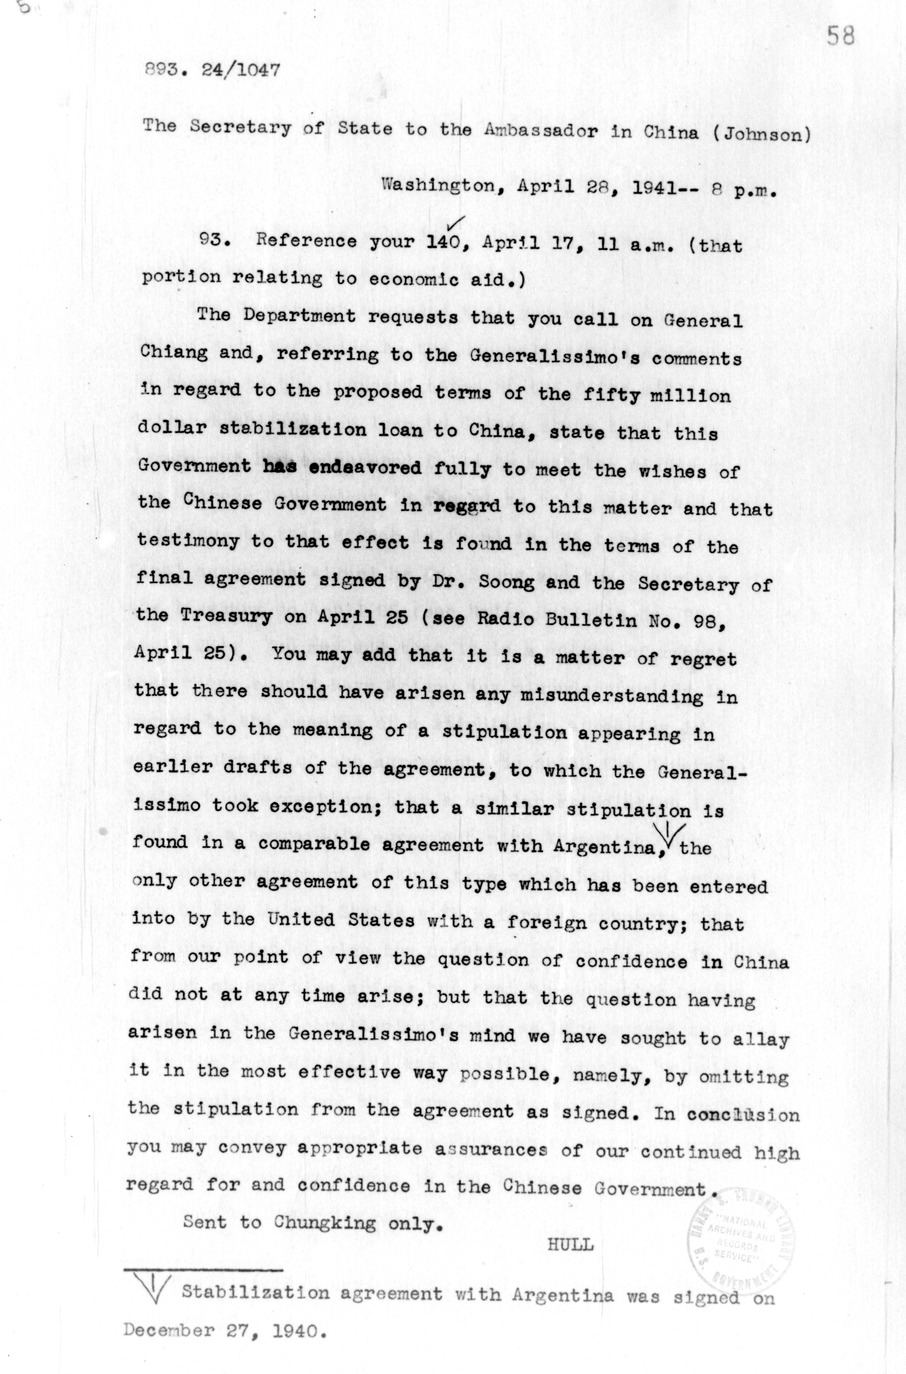 Memorandum from Secretary of State Cordell Hull to the Ambassador Nelson Johnson